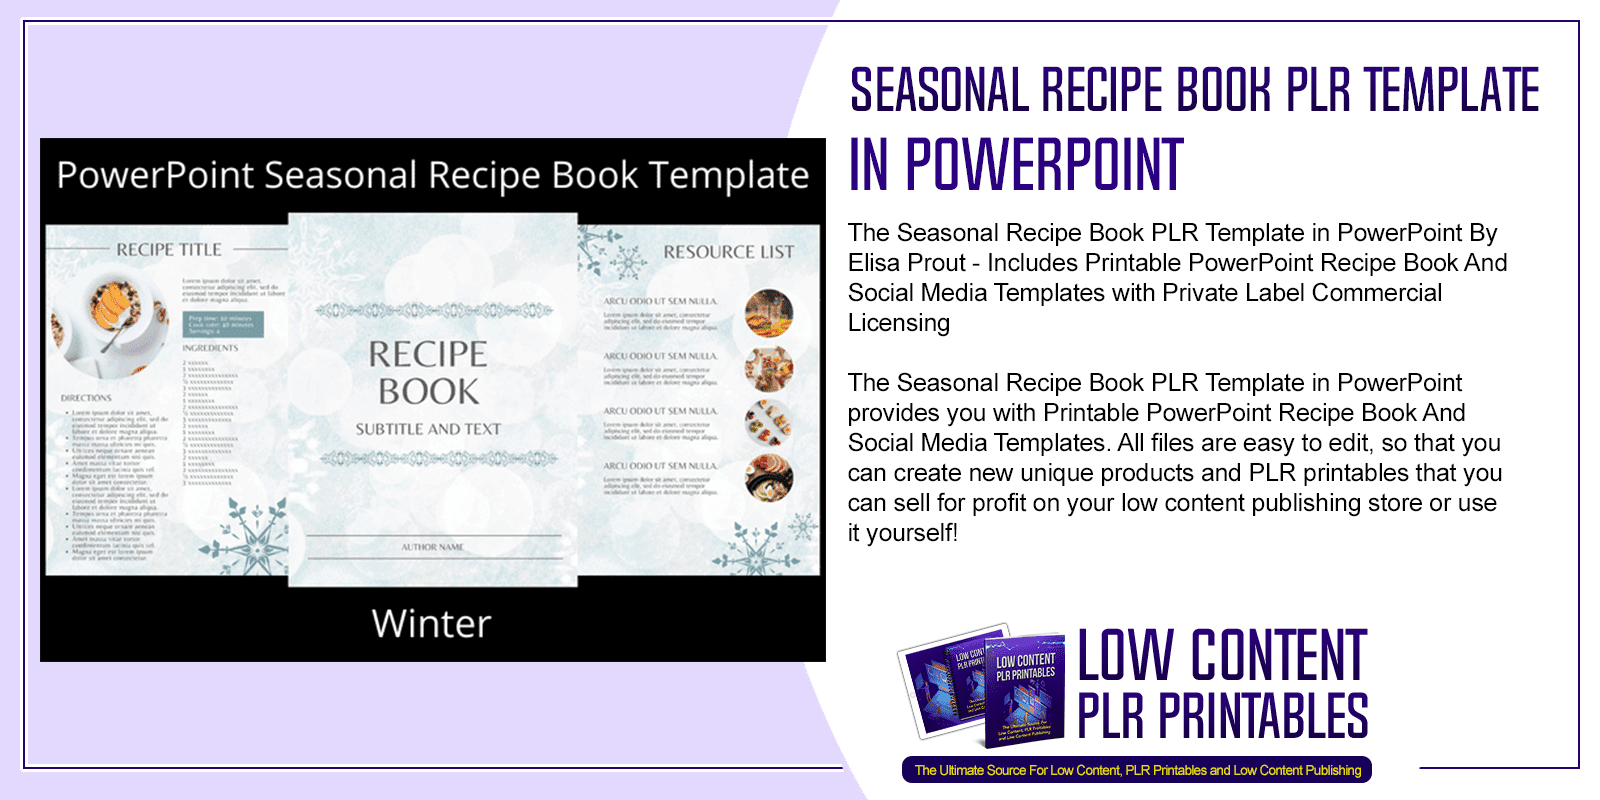 Seasonal Recipe Book PLR Template in PowerPoint